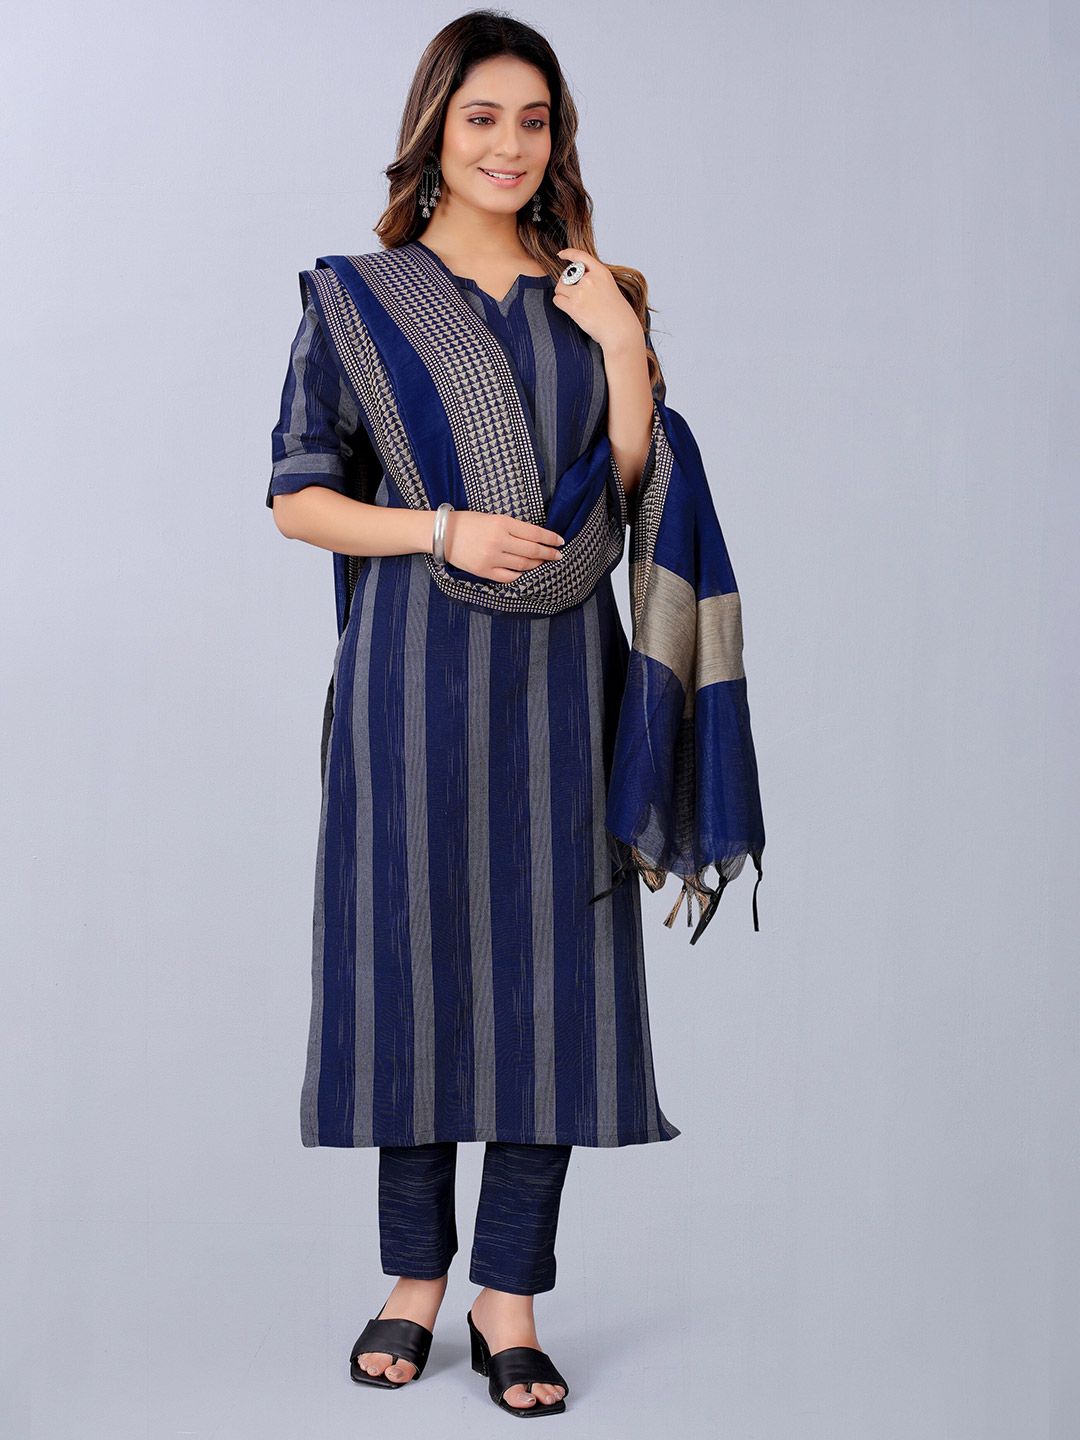 ASPORA Blue & White Pure Cotton Unstitched Dress Material Price in India